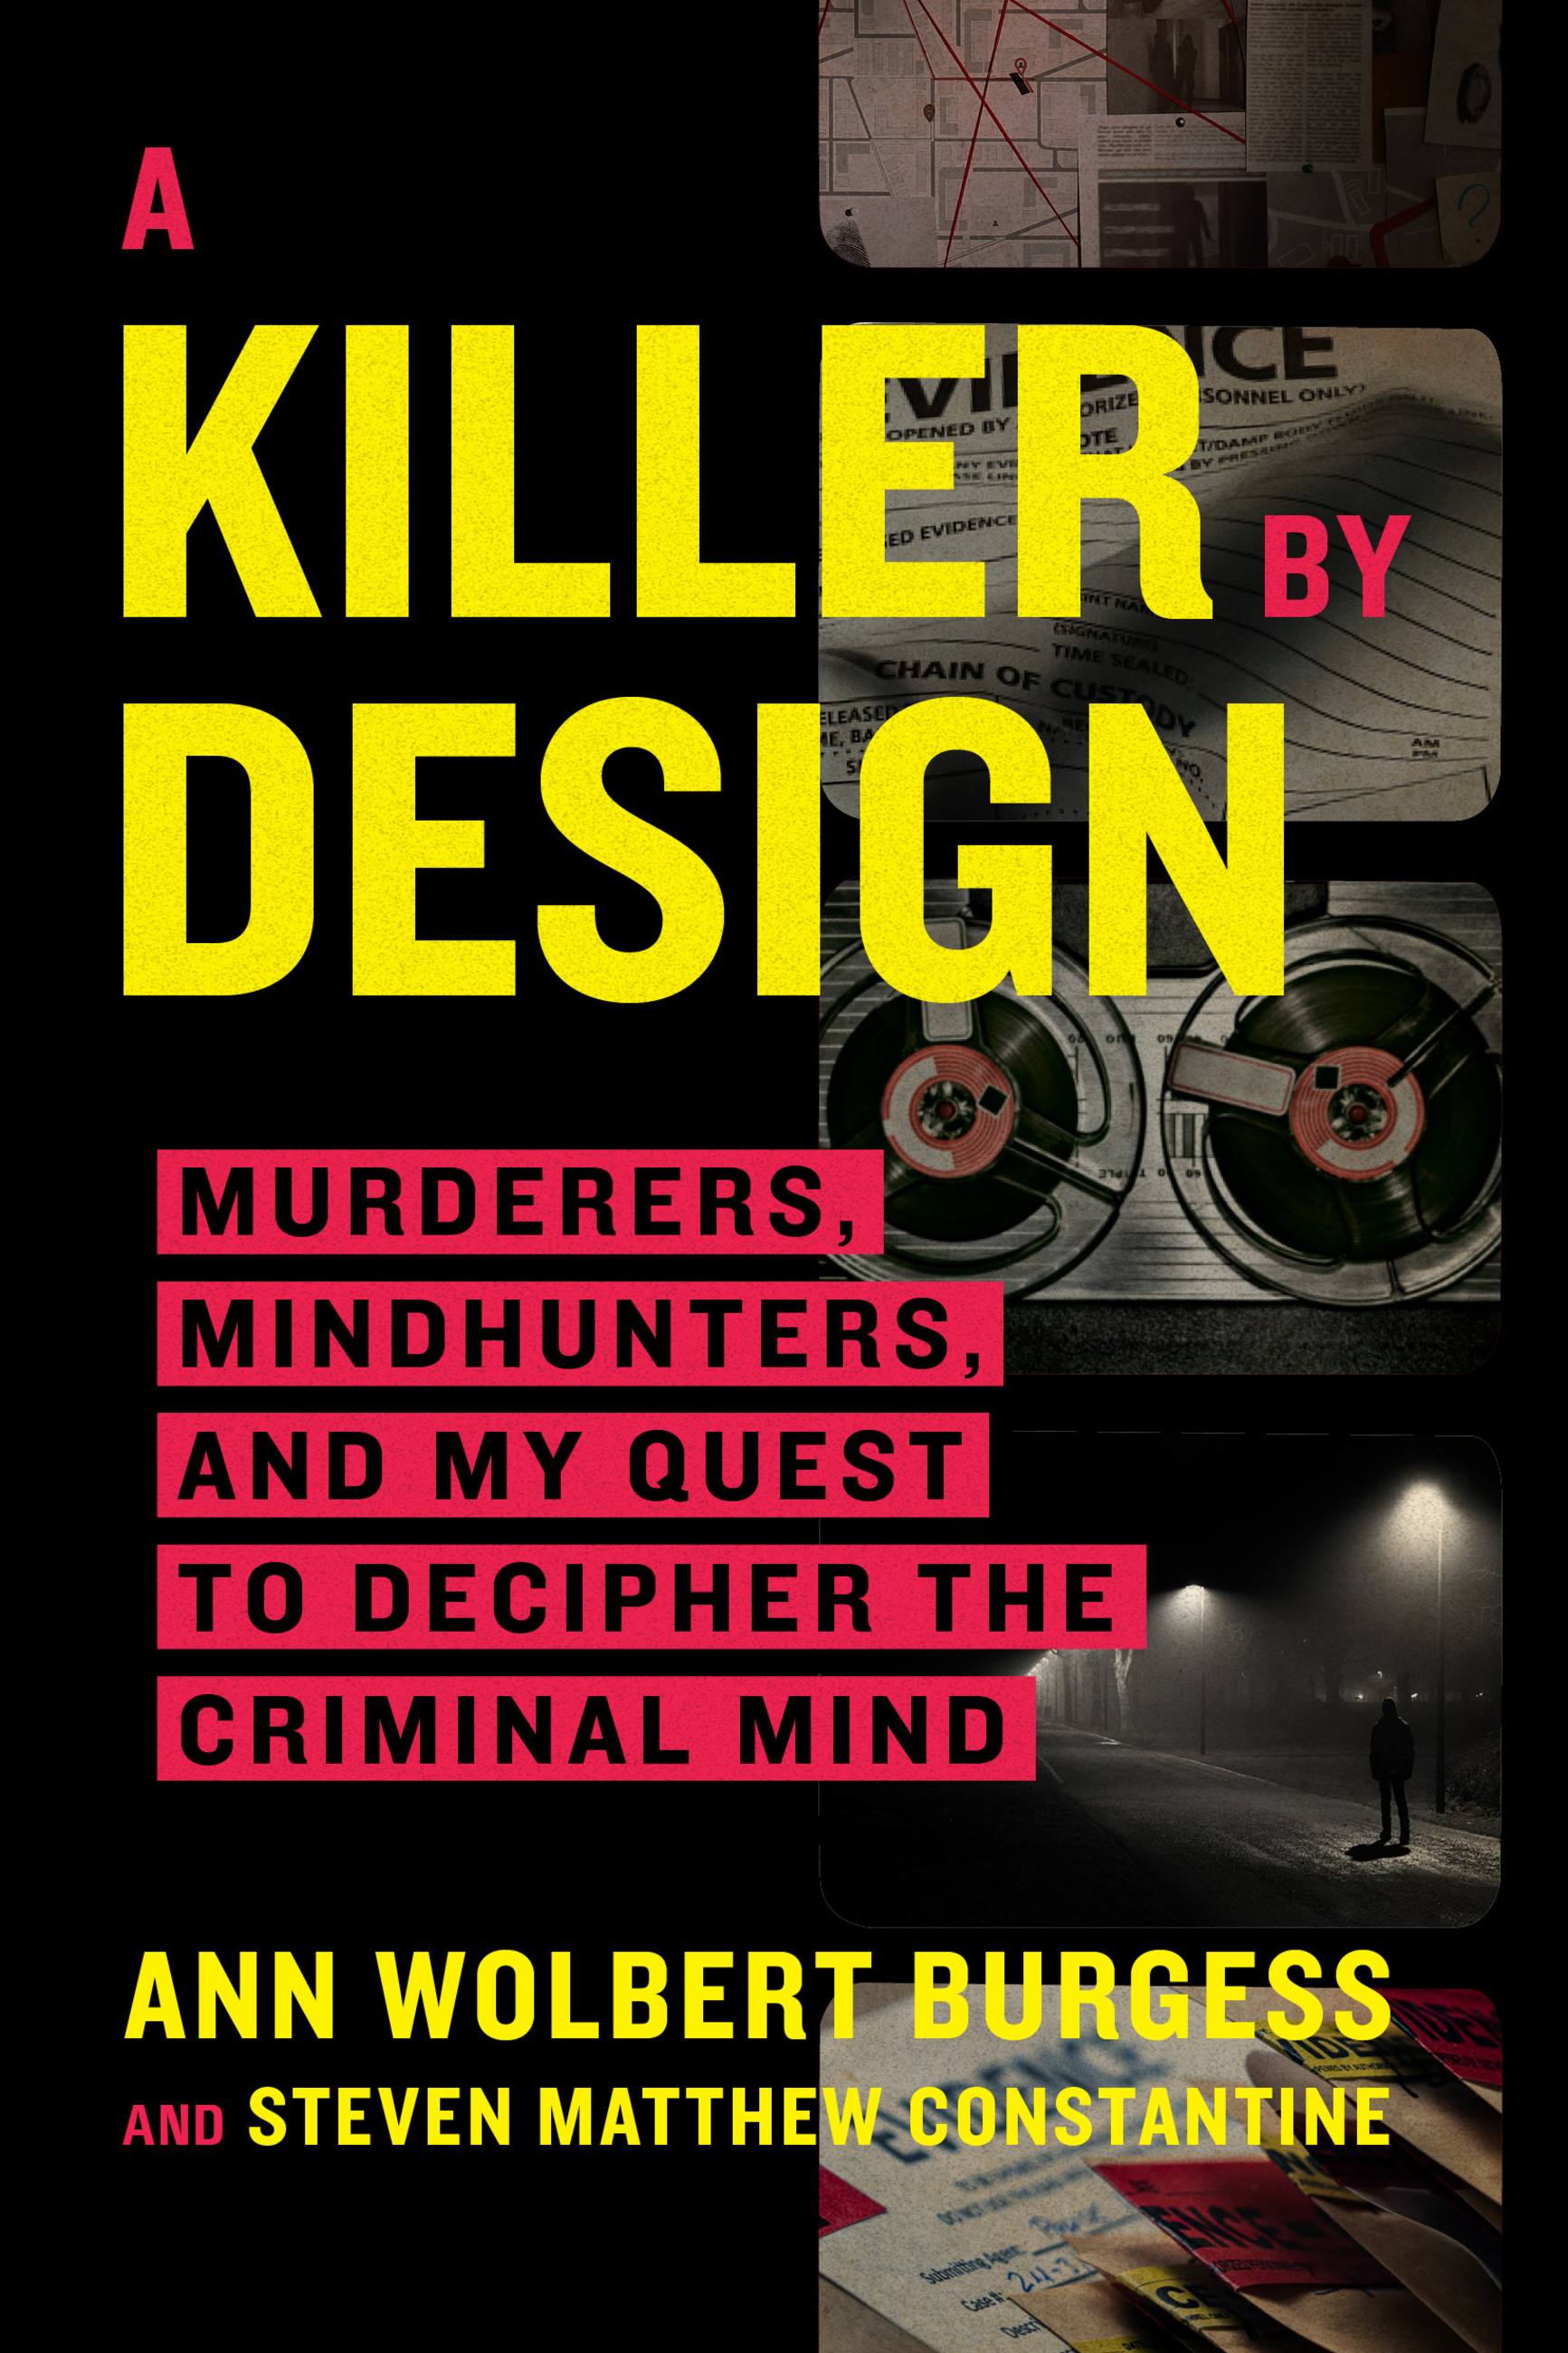 A Killer by Design by Ann Wolbert Burgess   Hachette Book Group